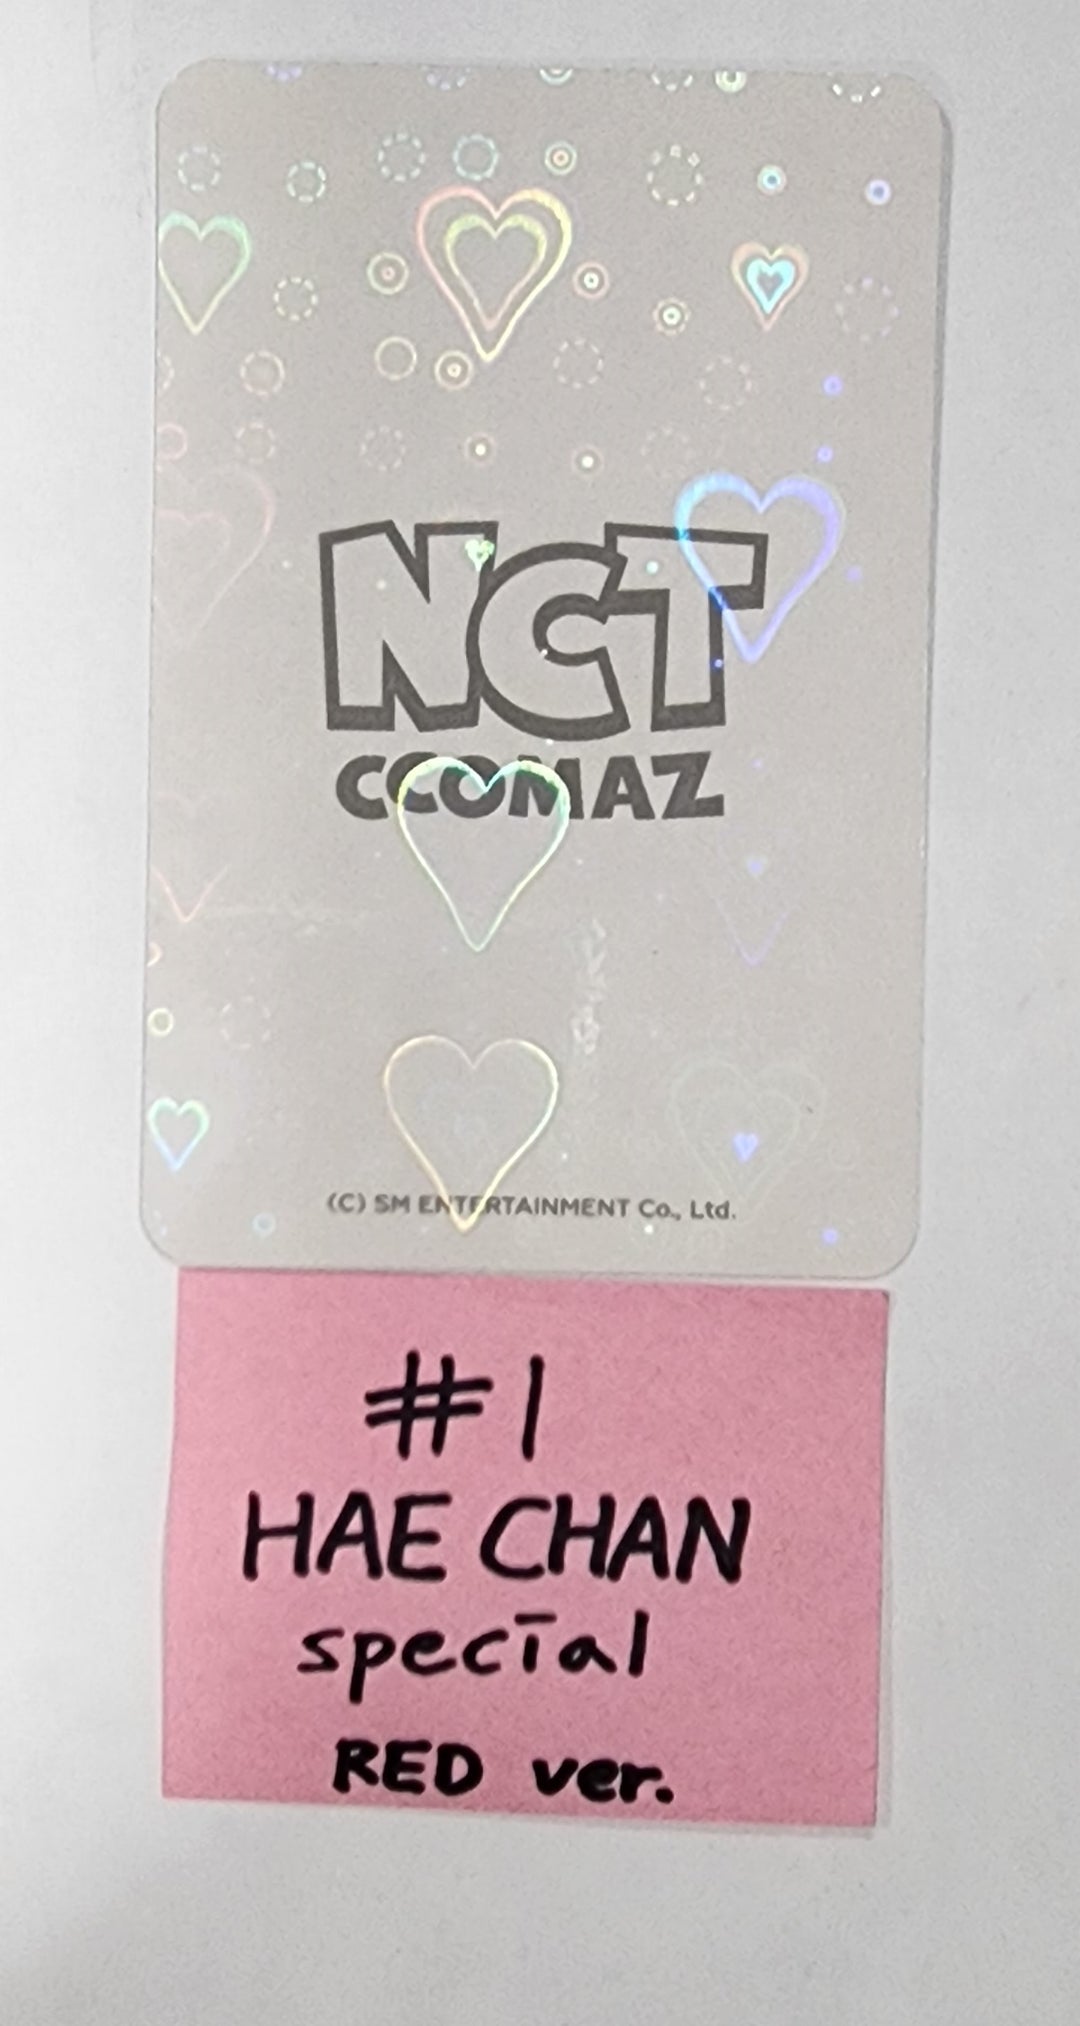 NCT "CCOMAZ" - Trading Special Hologram Photocard